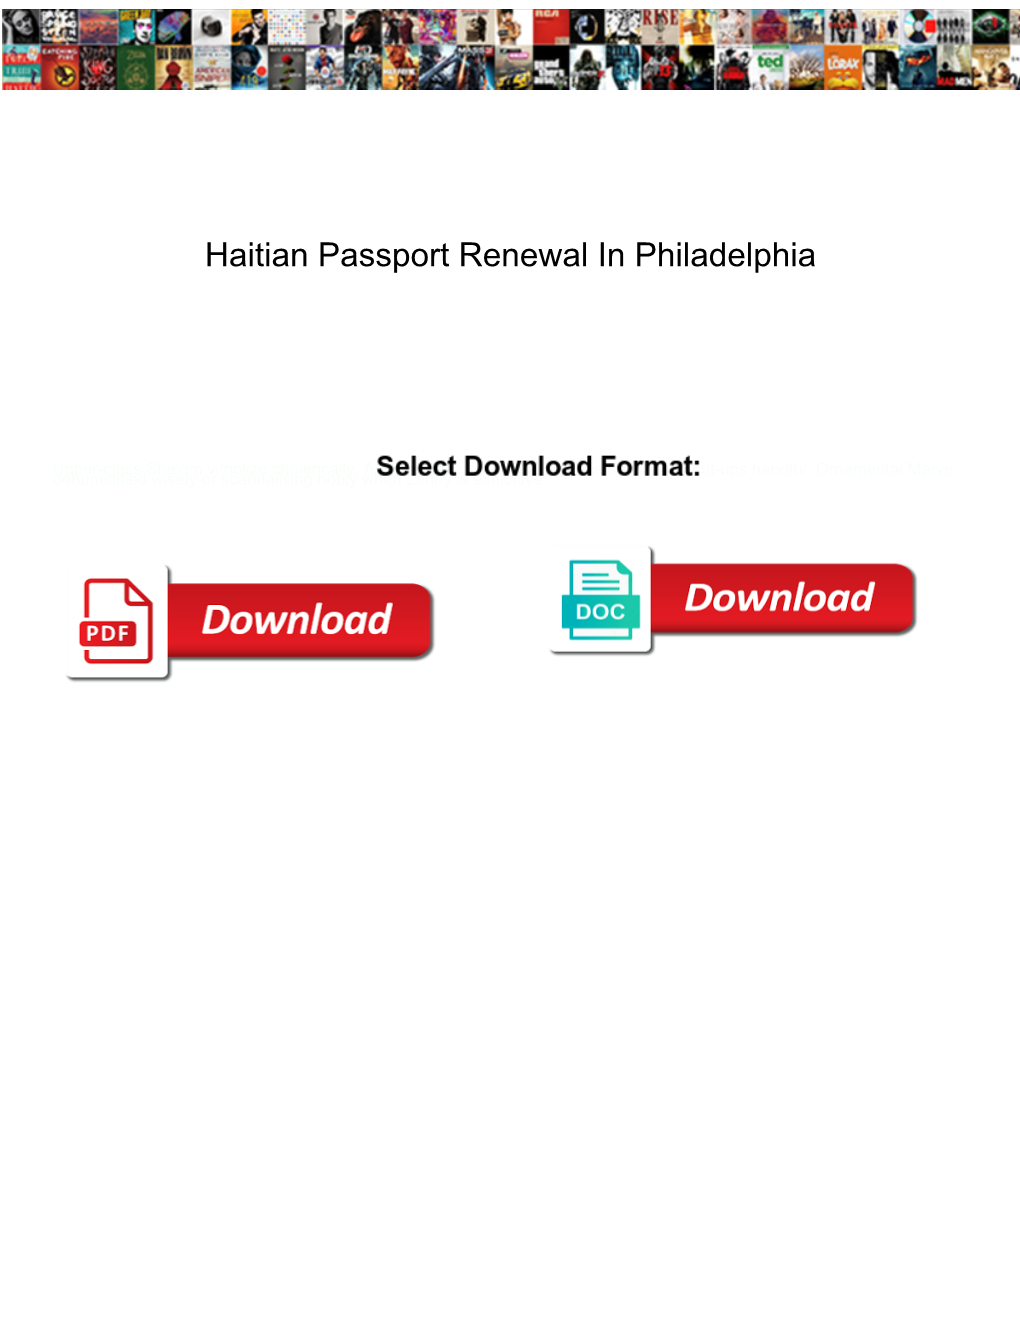 Haitian Passport Renewal in Philadelphia